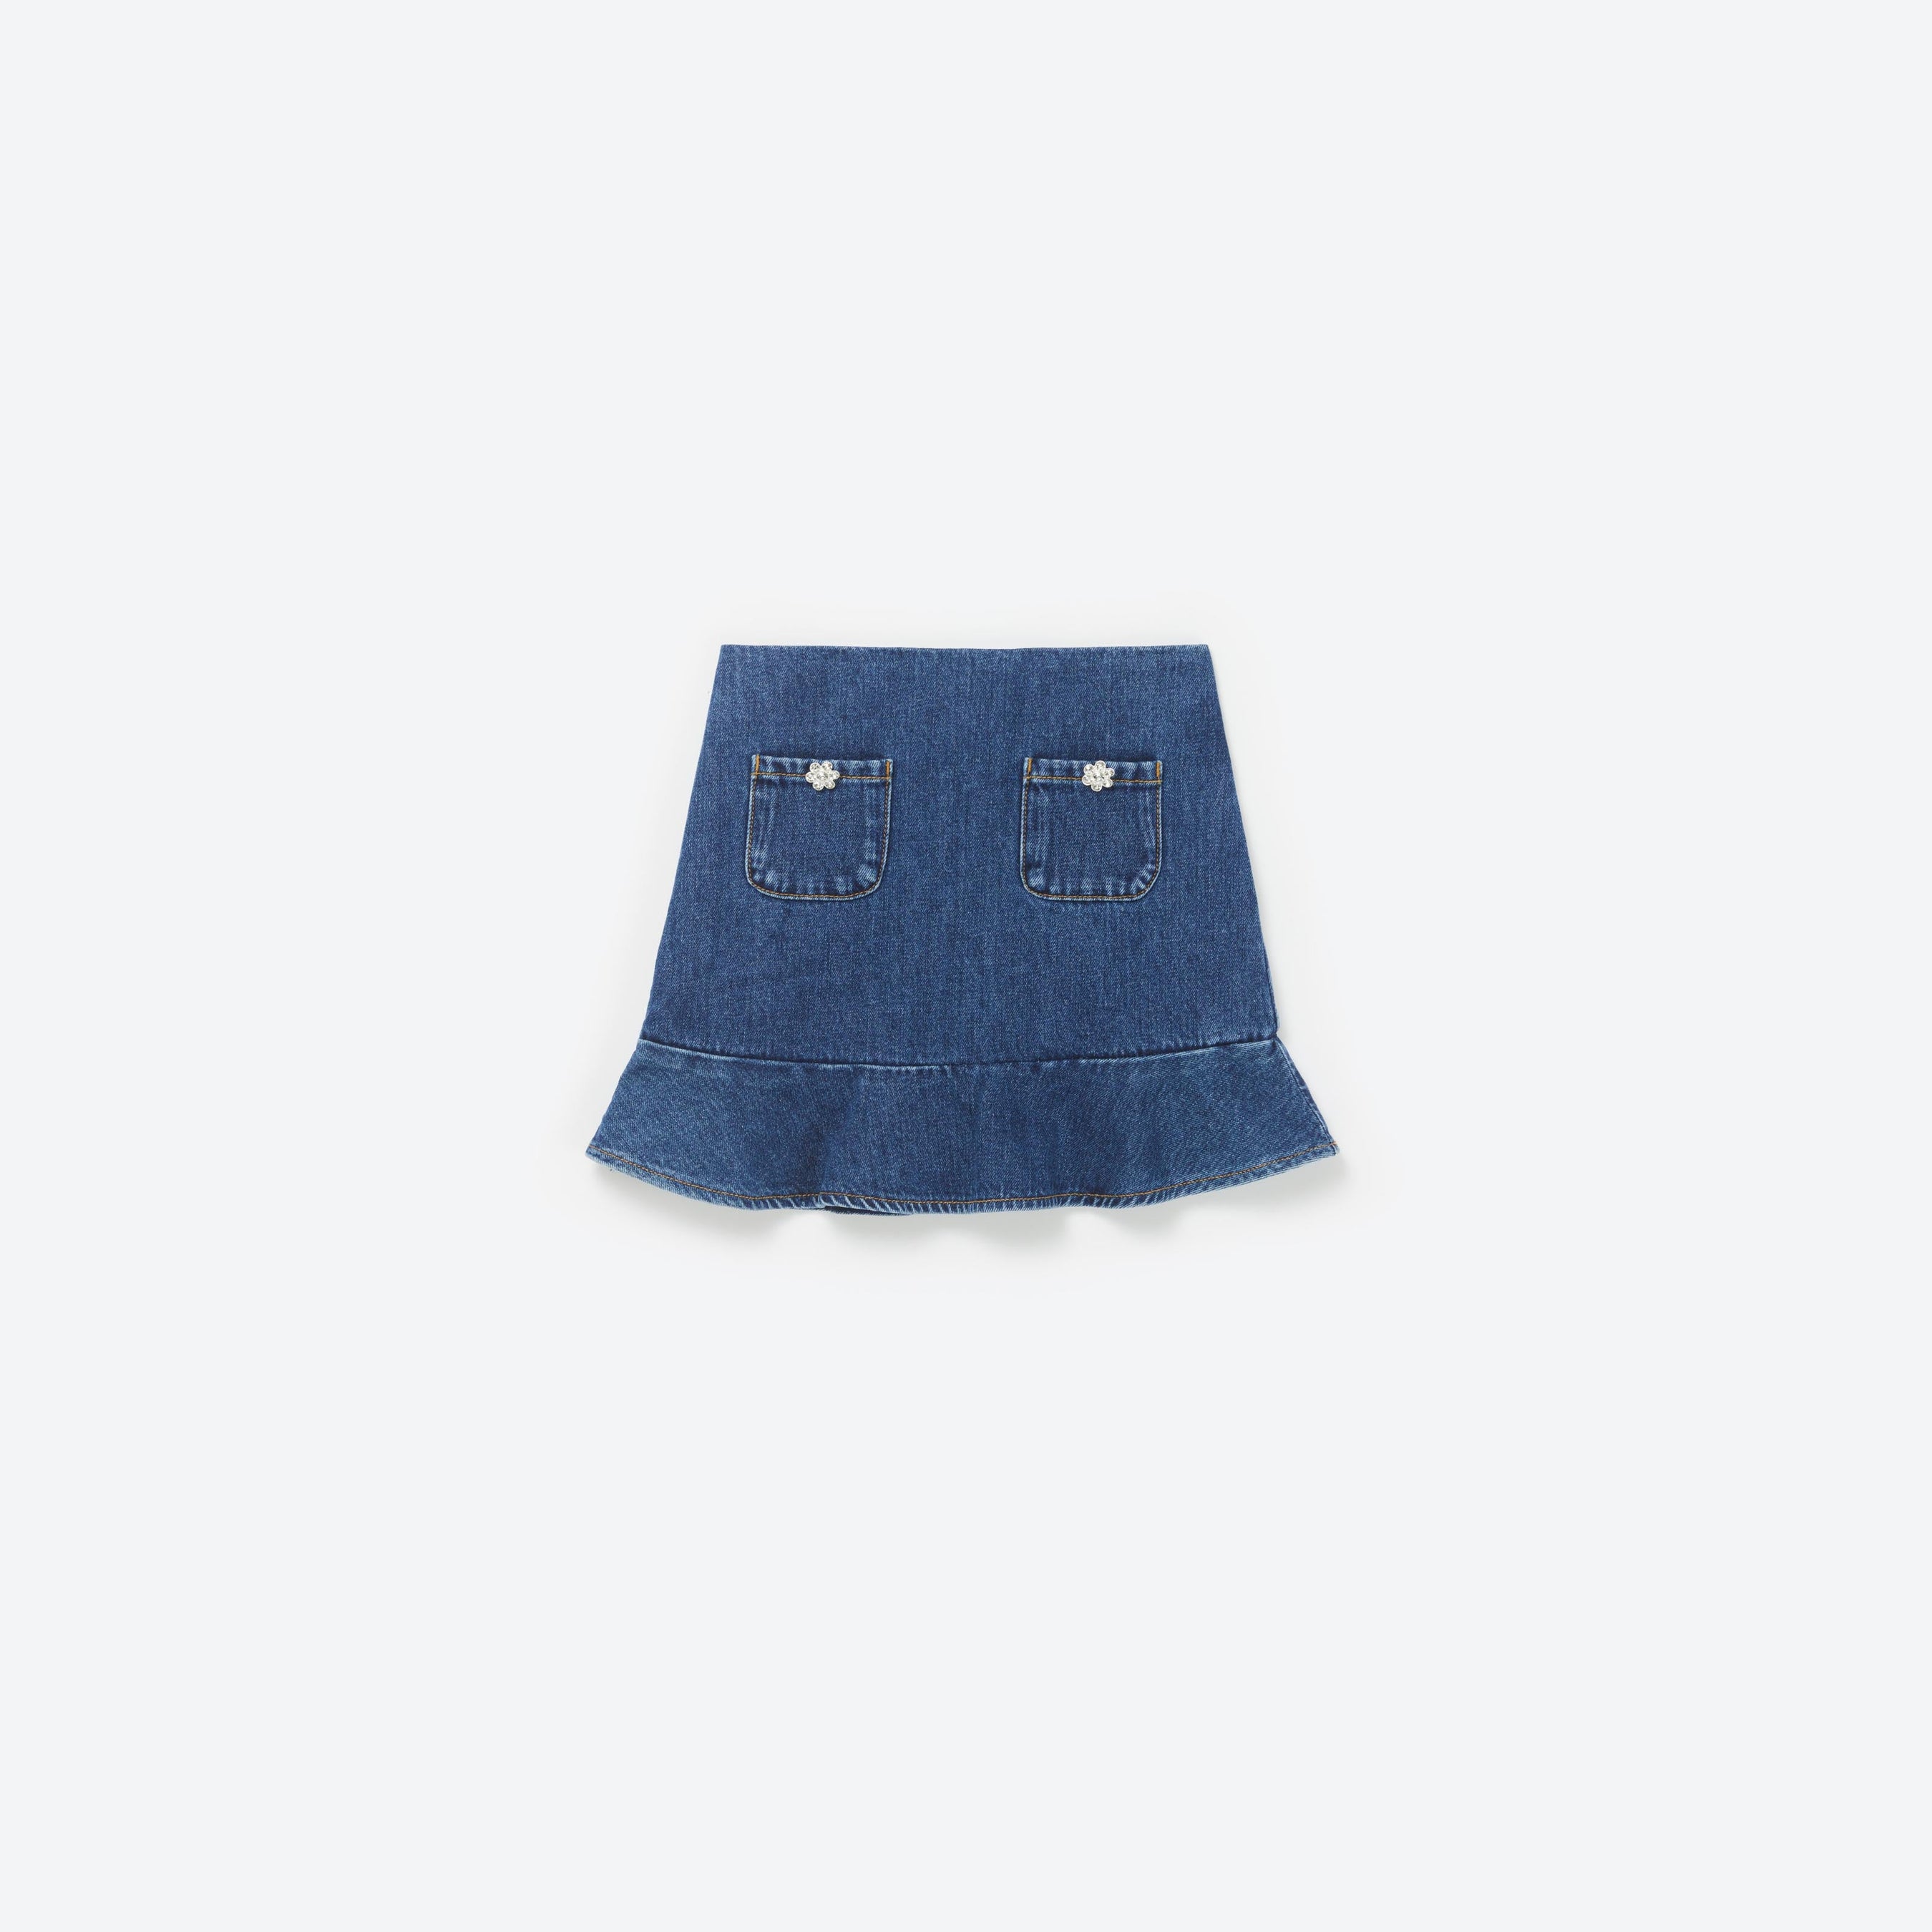 Blue Denim Peplum Mini Skirt